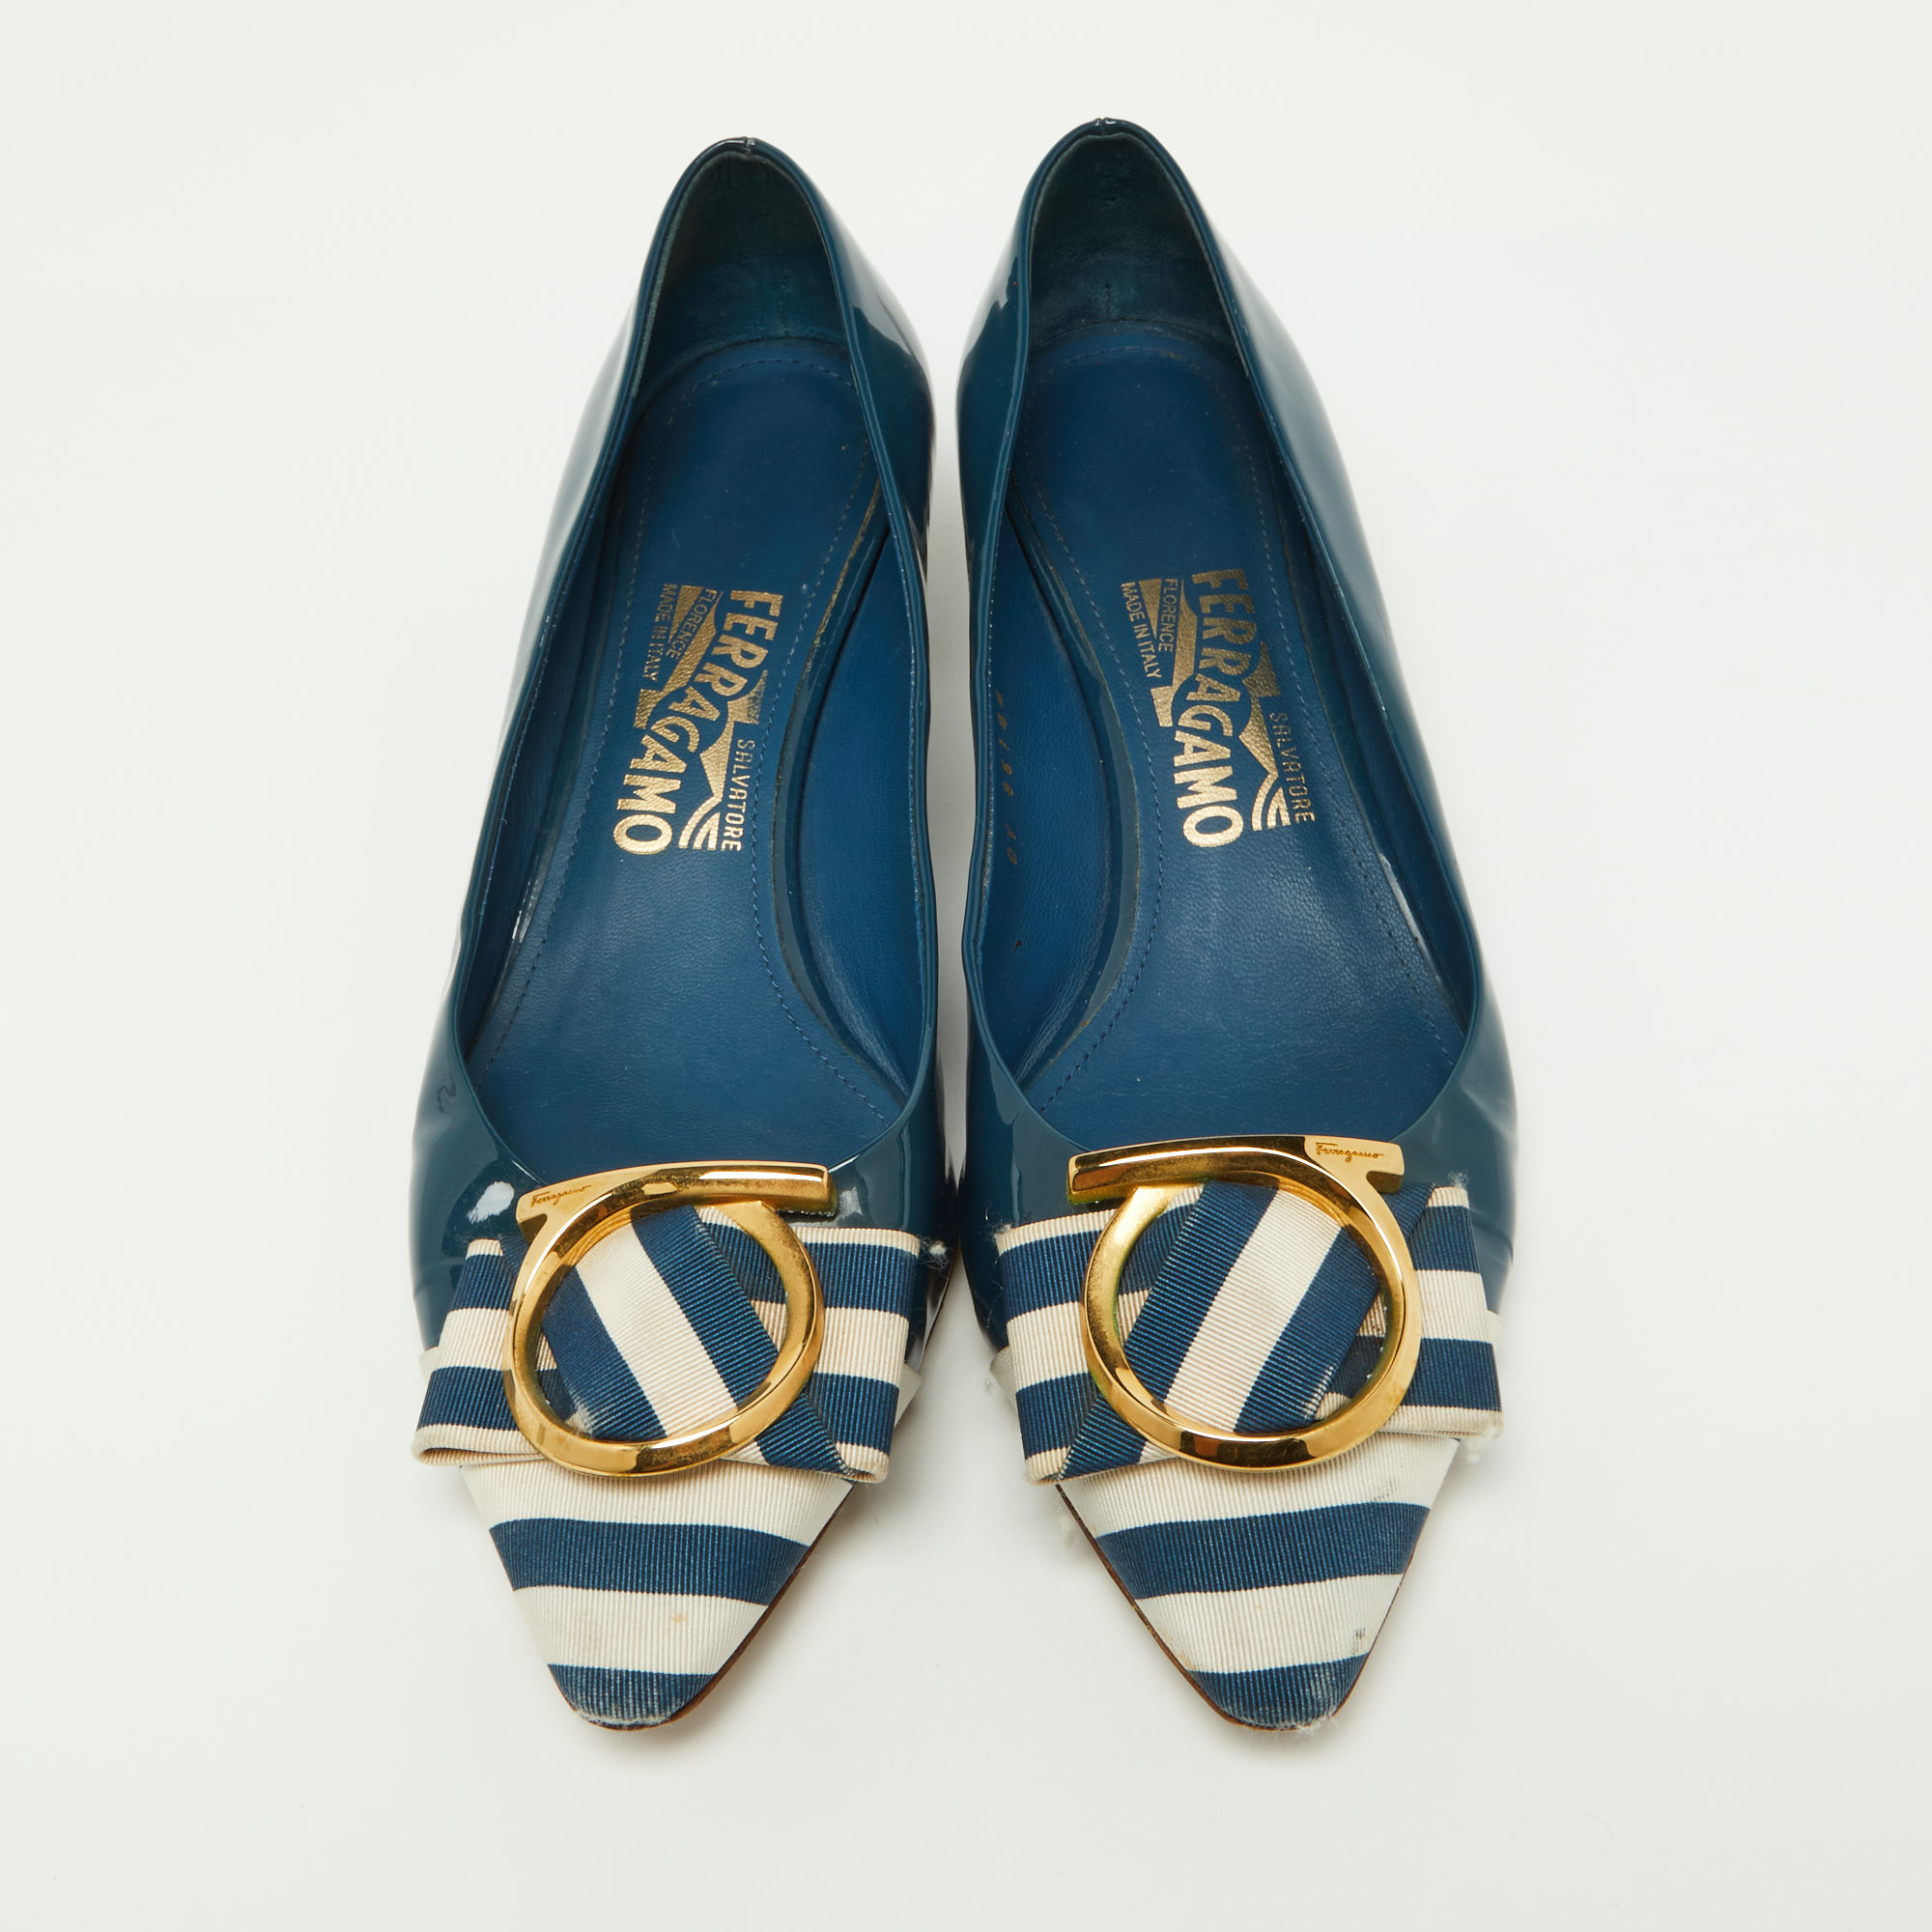 Salvatore Ferragamo Blue Patent Leather And Fabric Fele Gancio Pointed Ballet Flat Size 39